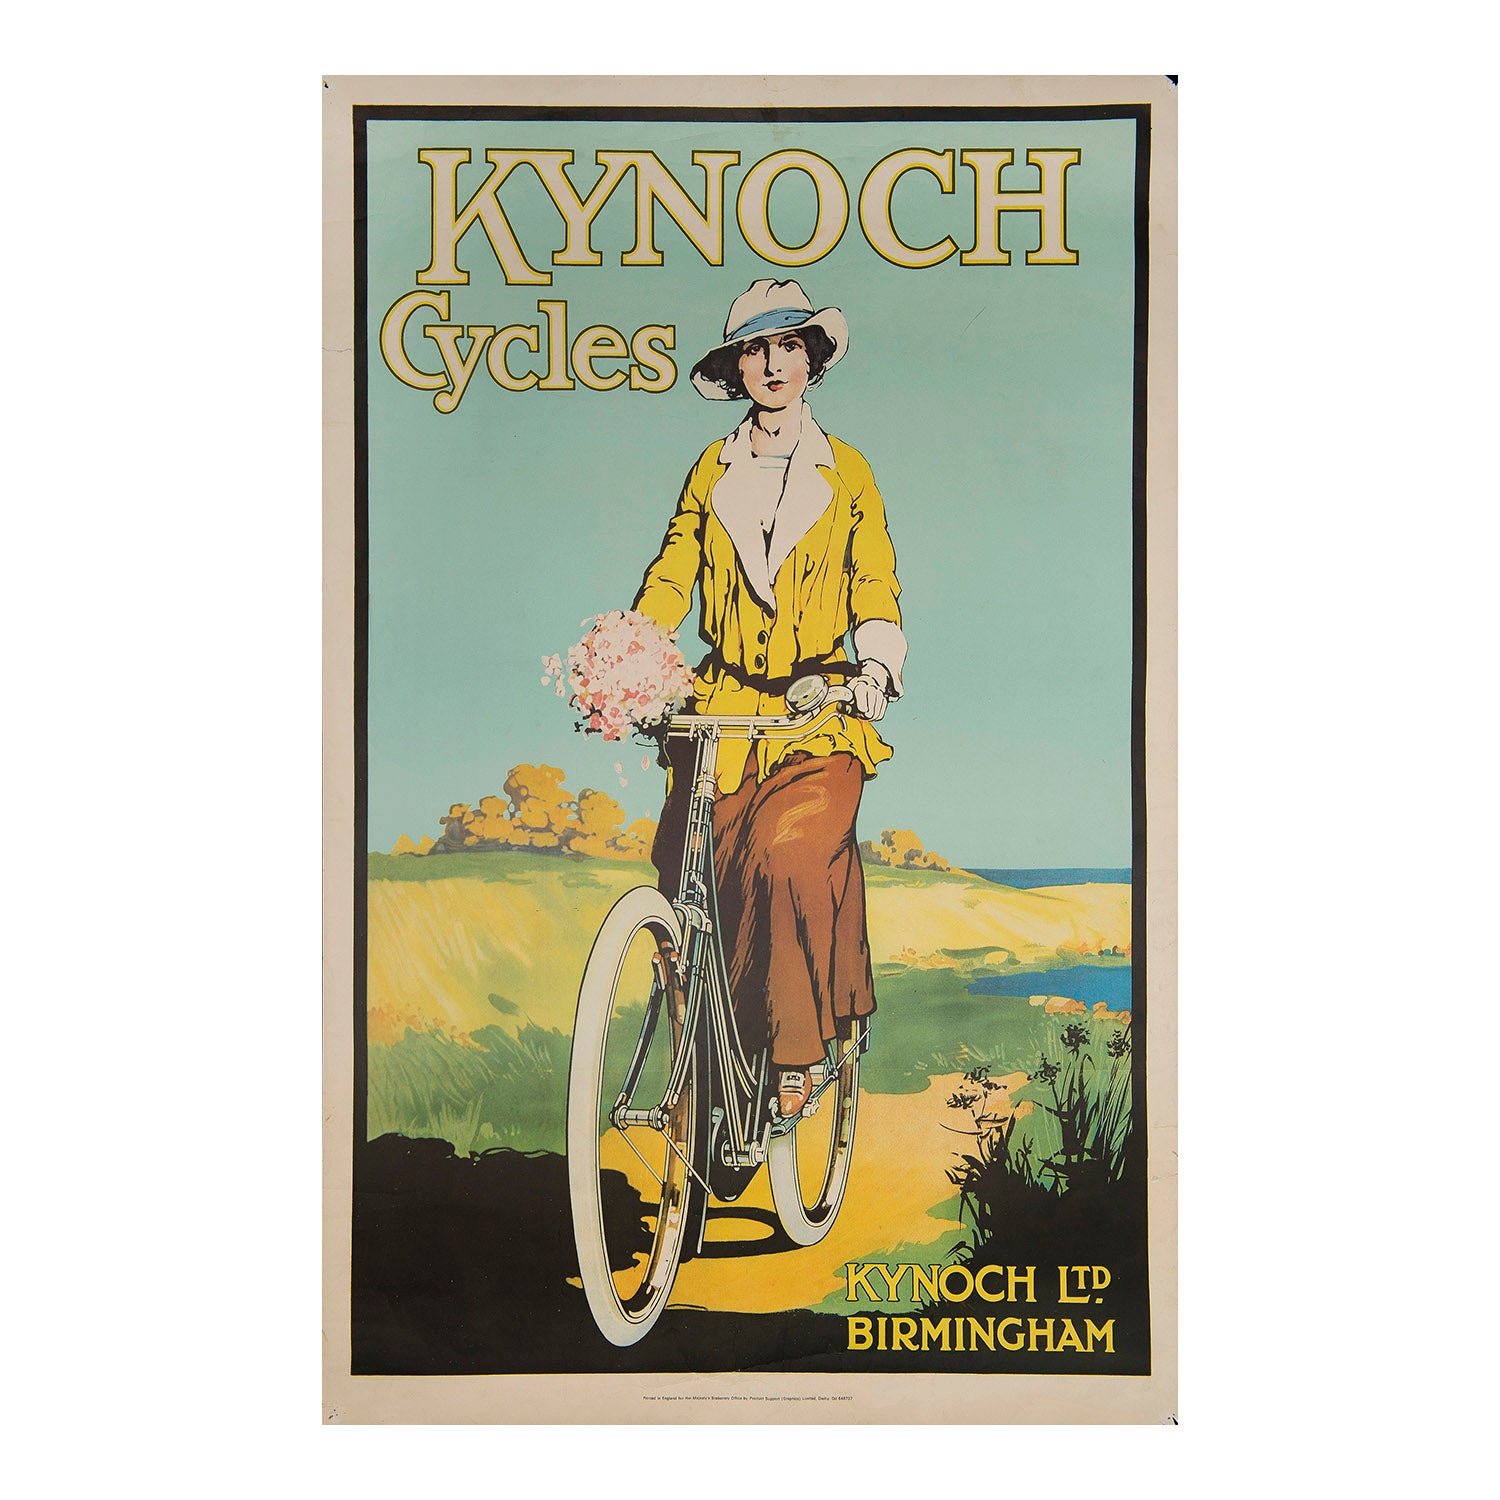 Kynoch Cycles (reprint)